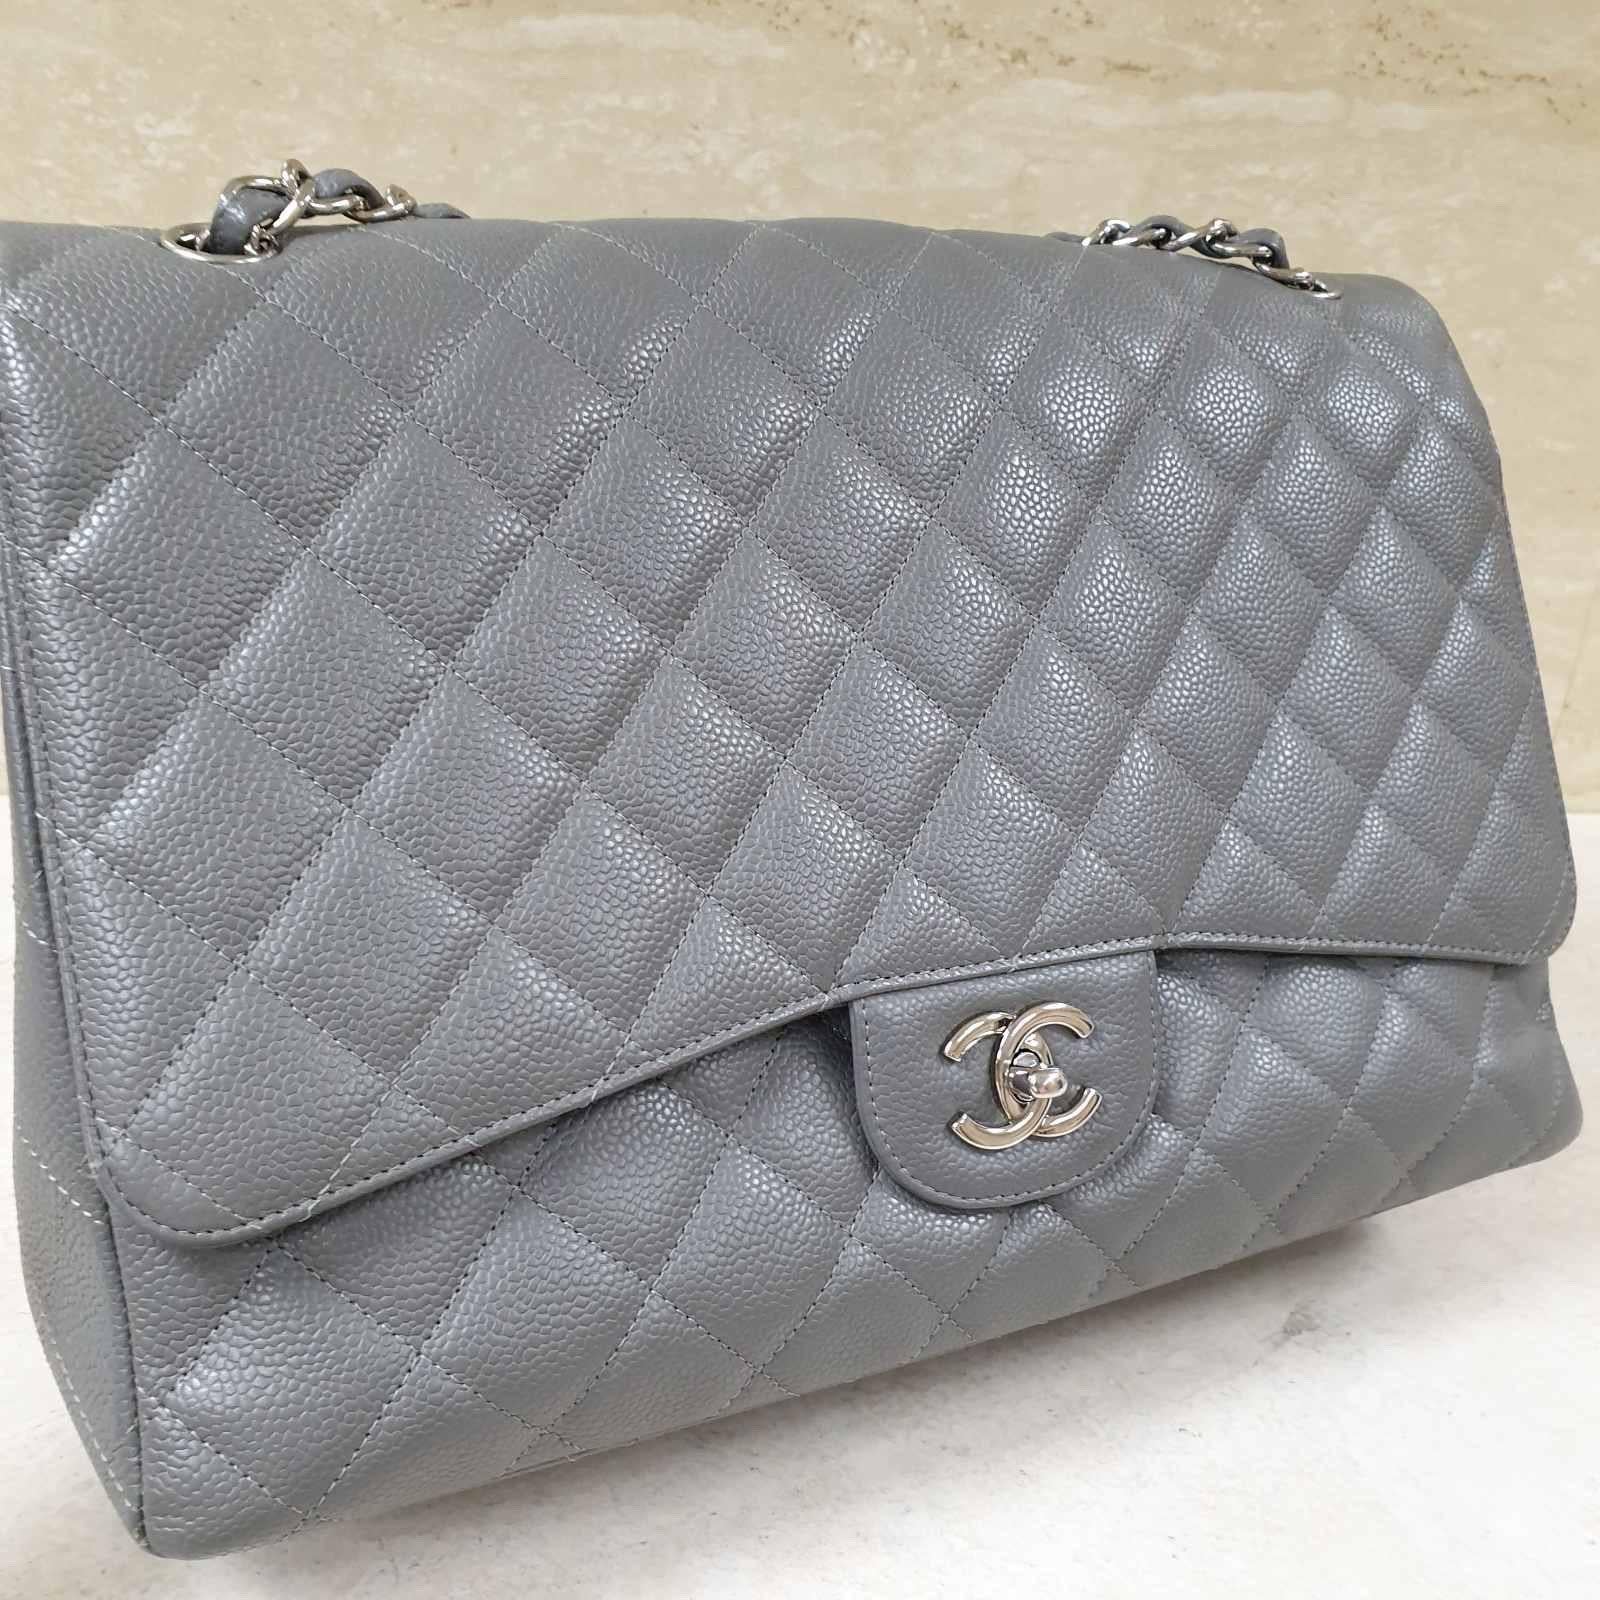 CHANEL Jumbo Gray Caviar Leather Maxi Bag 5